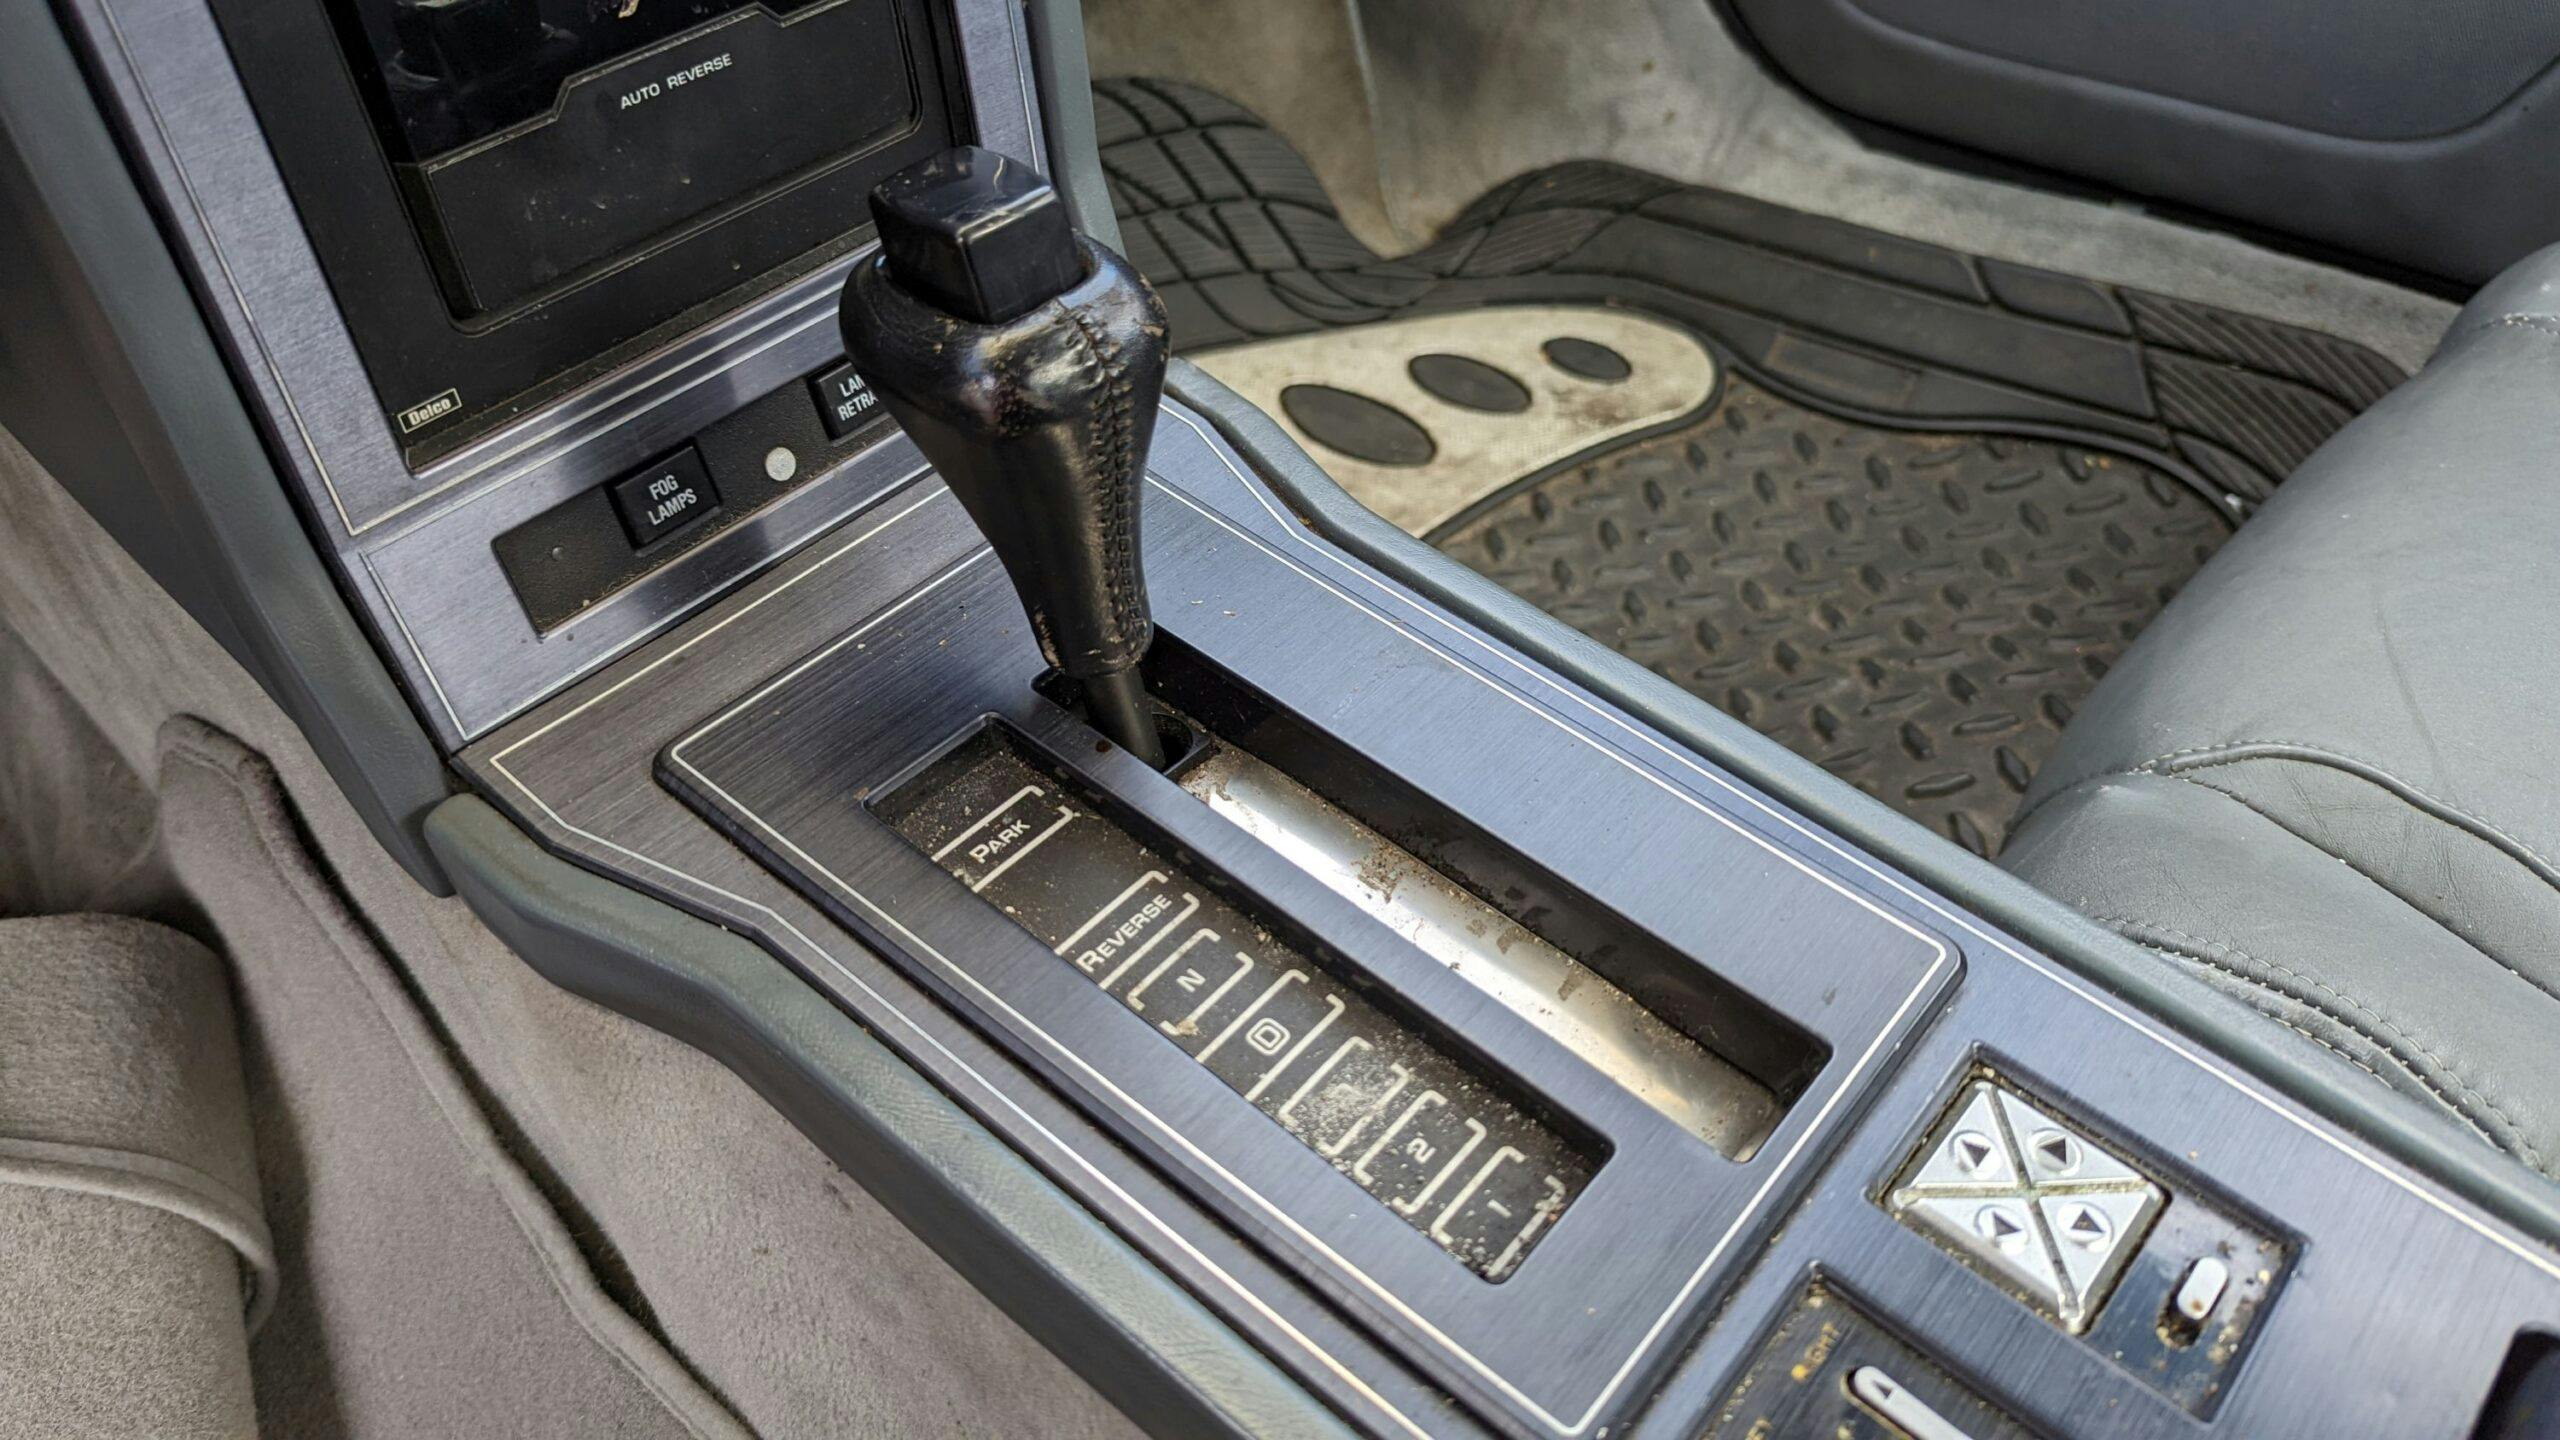 1989 Buick Reatta interior gear selector